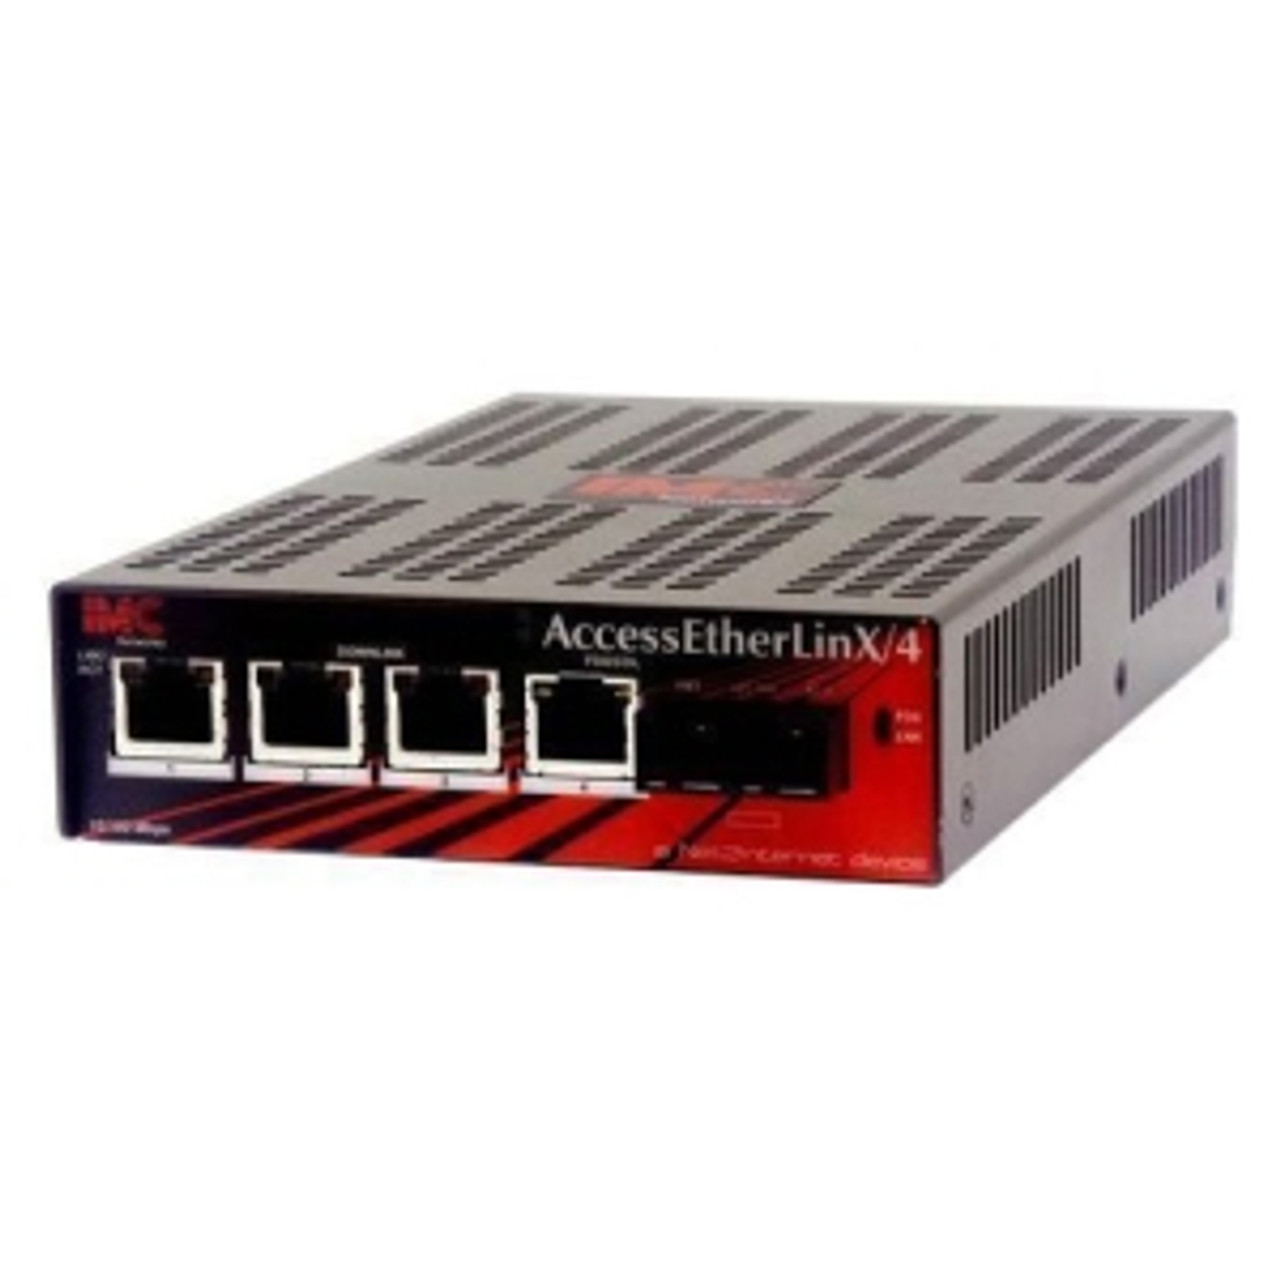 852-10081 IMC AccessEtherLinX/4 852-10081 Ethernet Switch 5 Ports Manageable 4 x RJ-45 1 x SC 10/100Base-TX, 100Base-FX